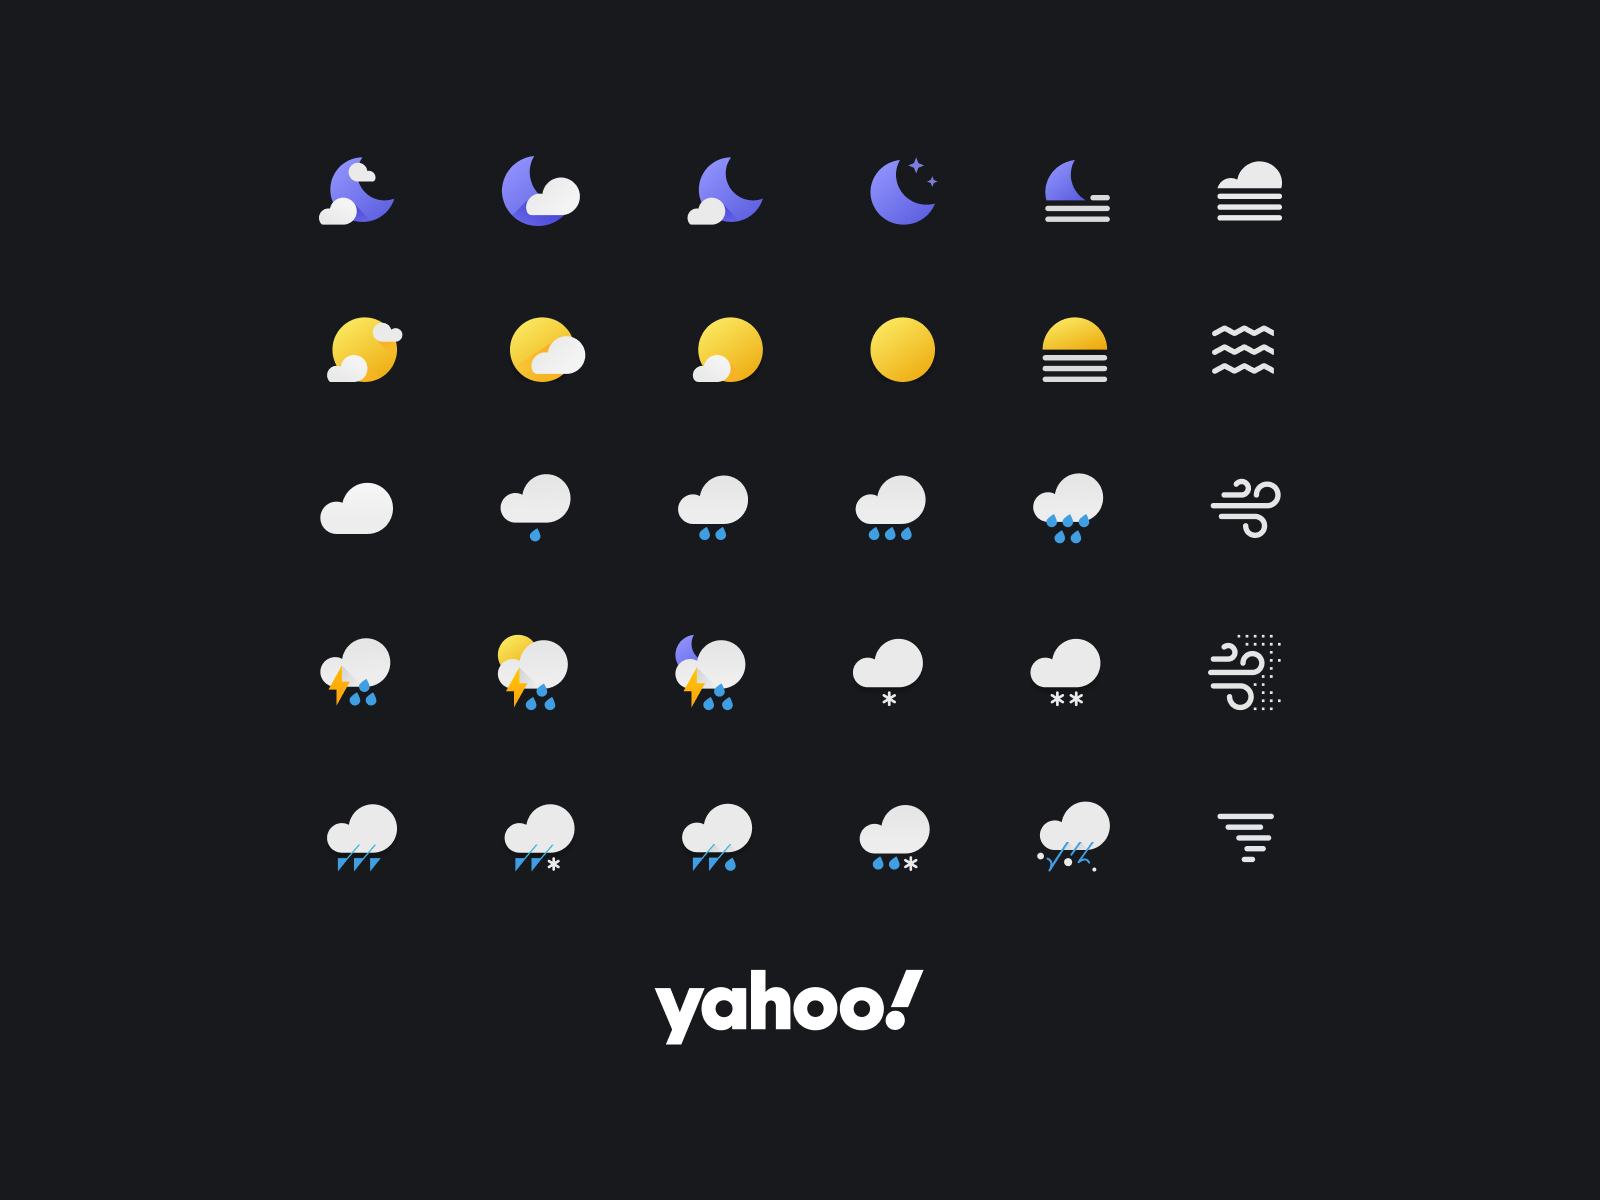 yahoo weather icons by Budi Tanrim on Dribbble